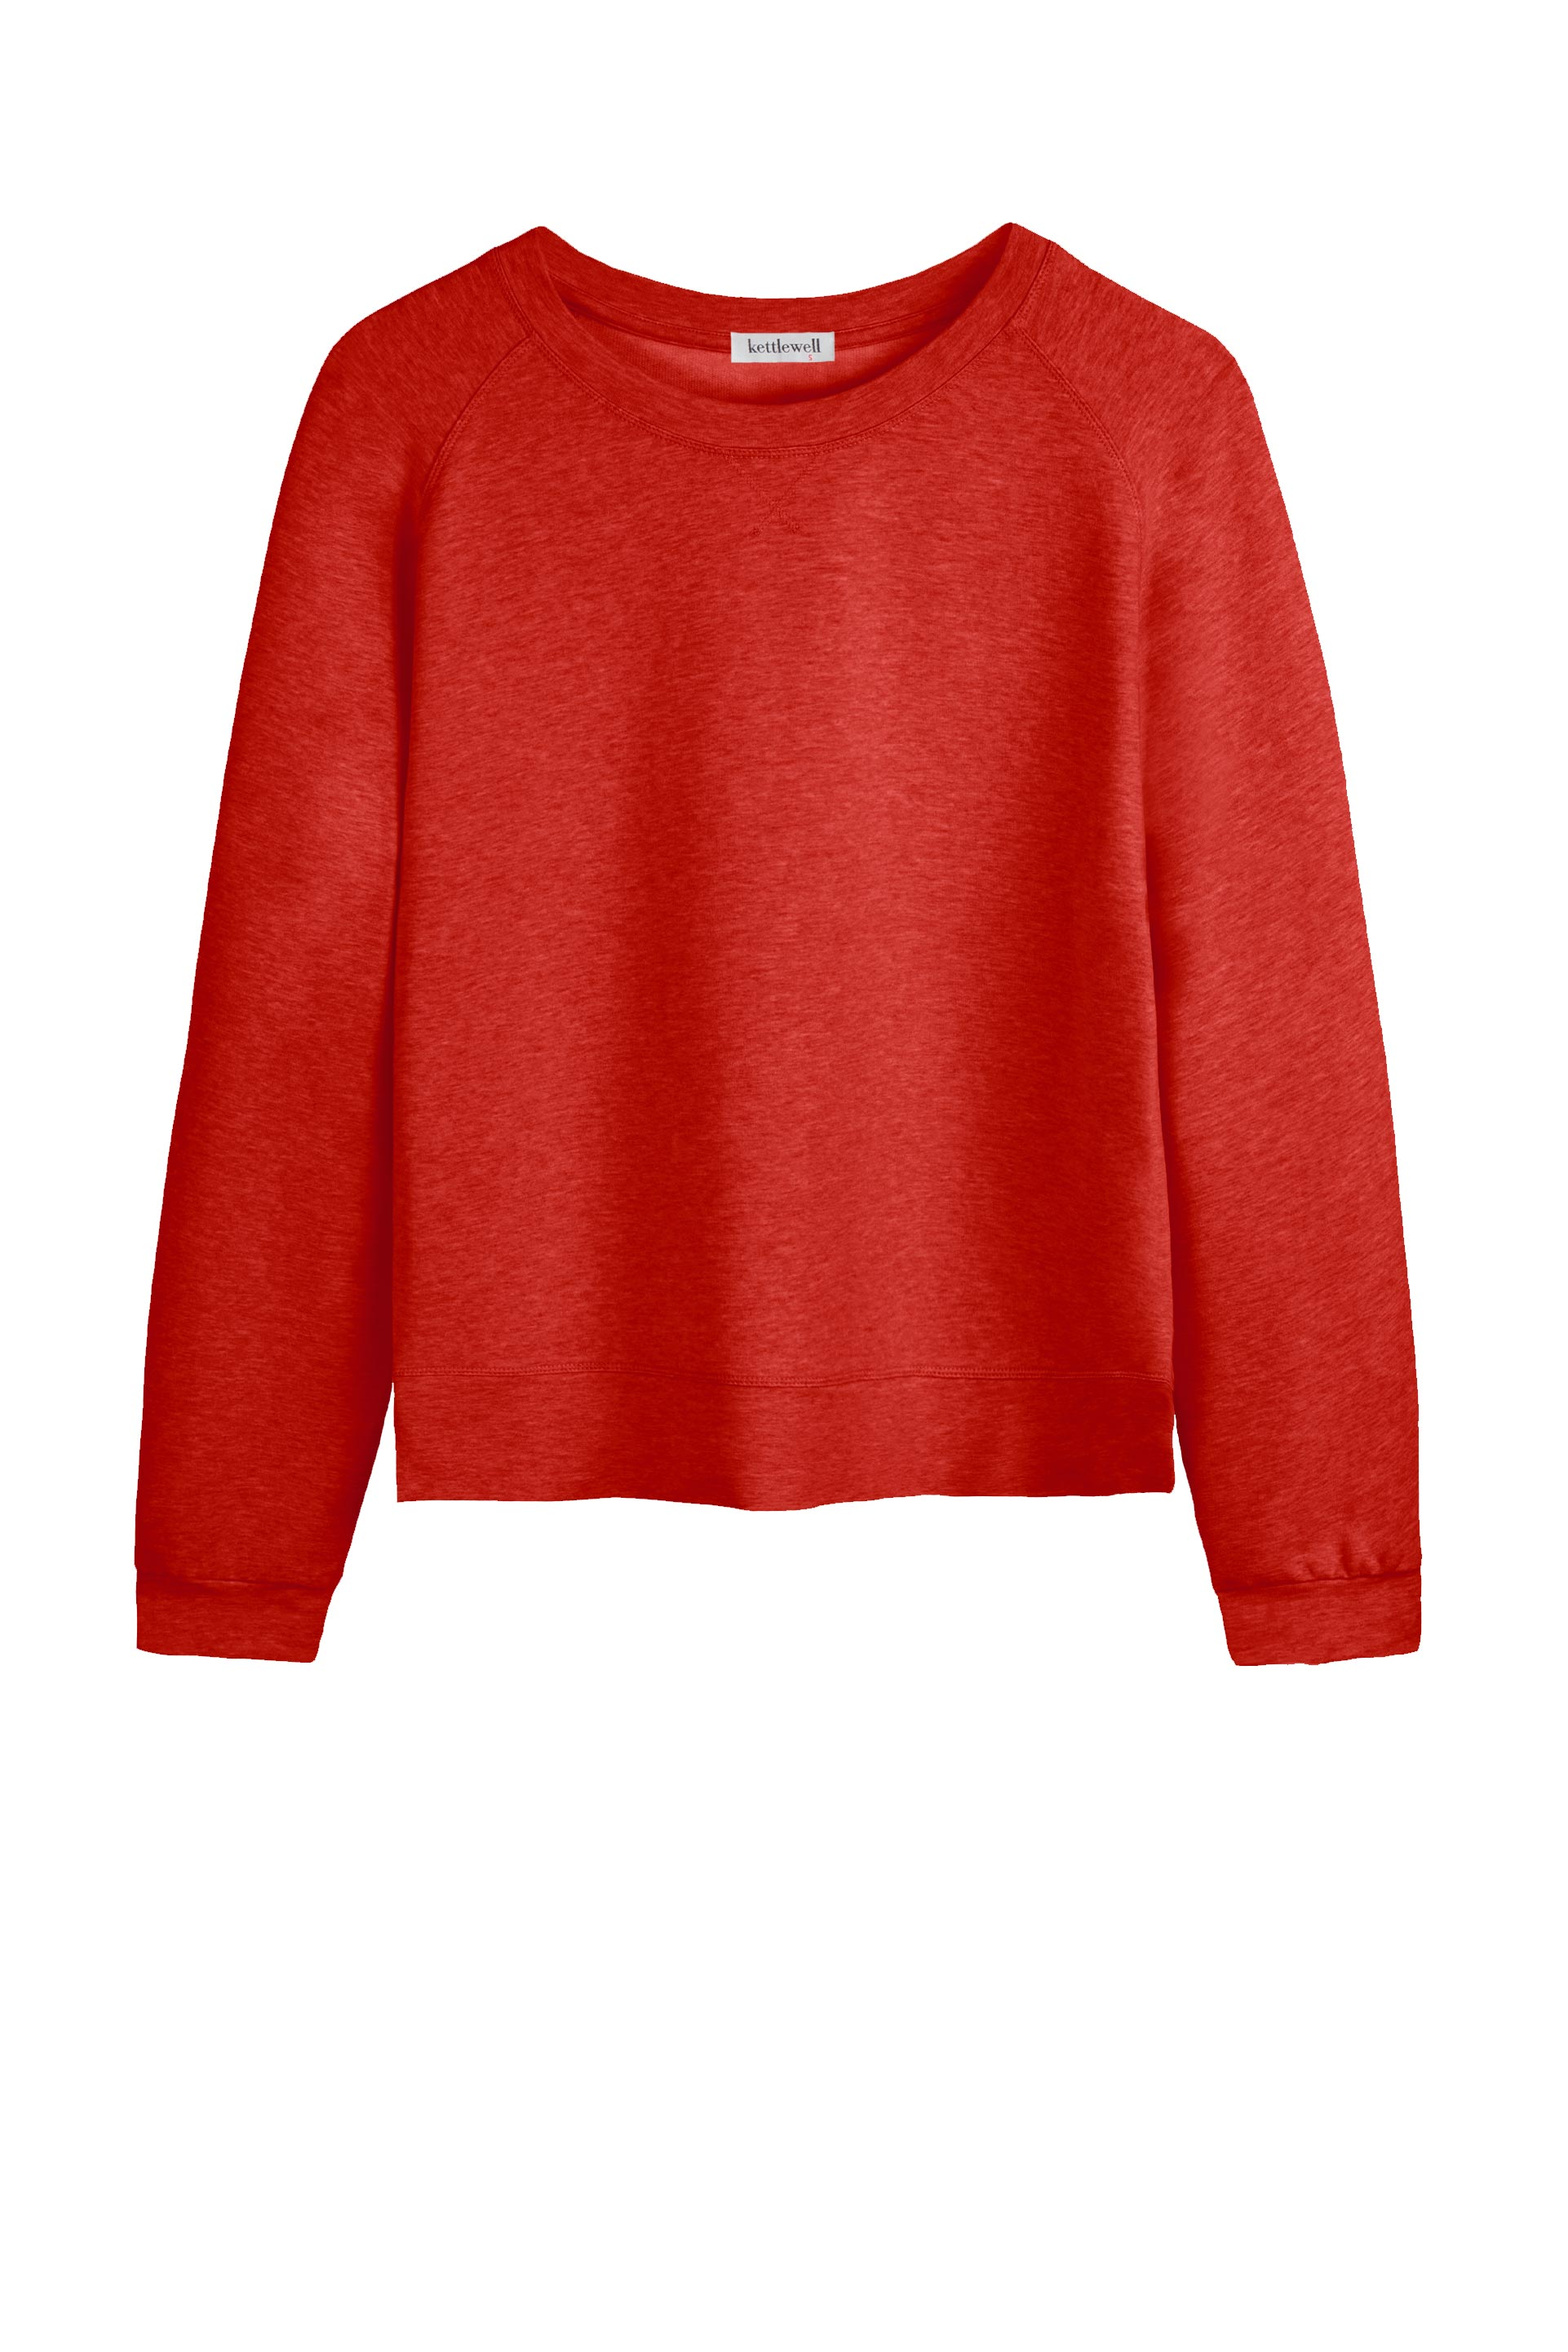 16003_supersoft_sweater_brick_red.jpg